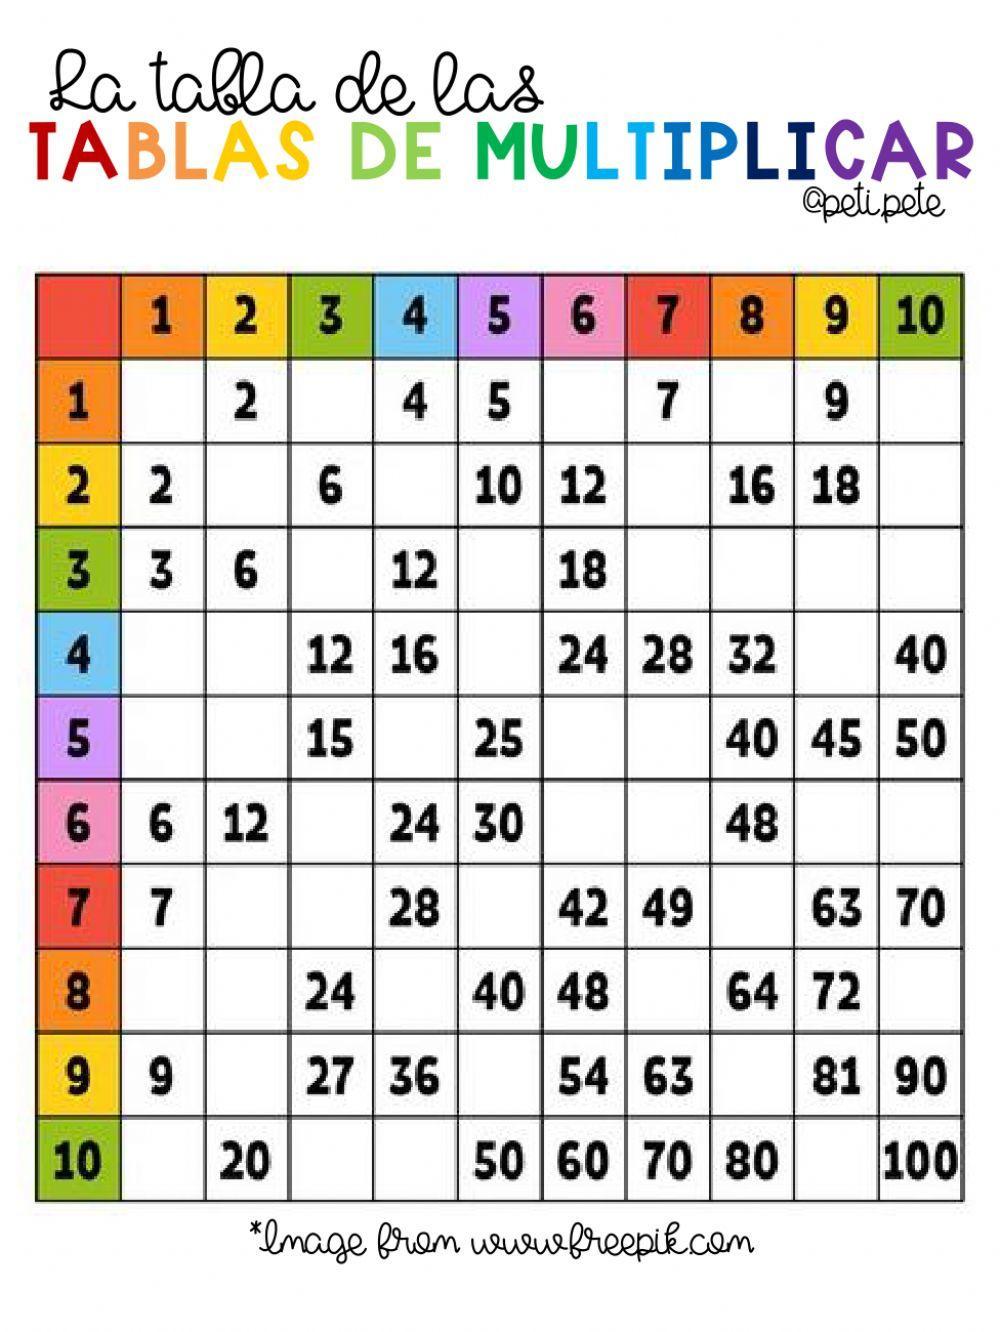 La tabla de las tablas de multiplicar